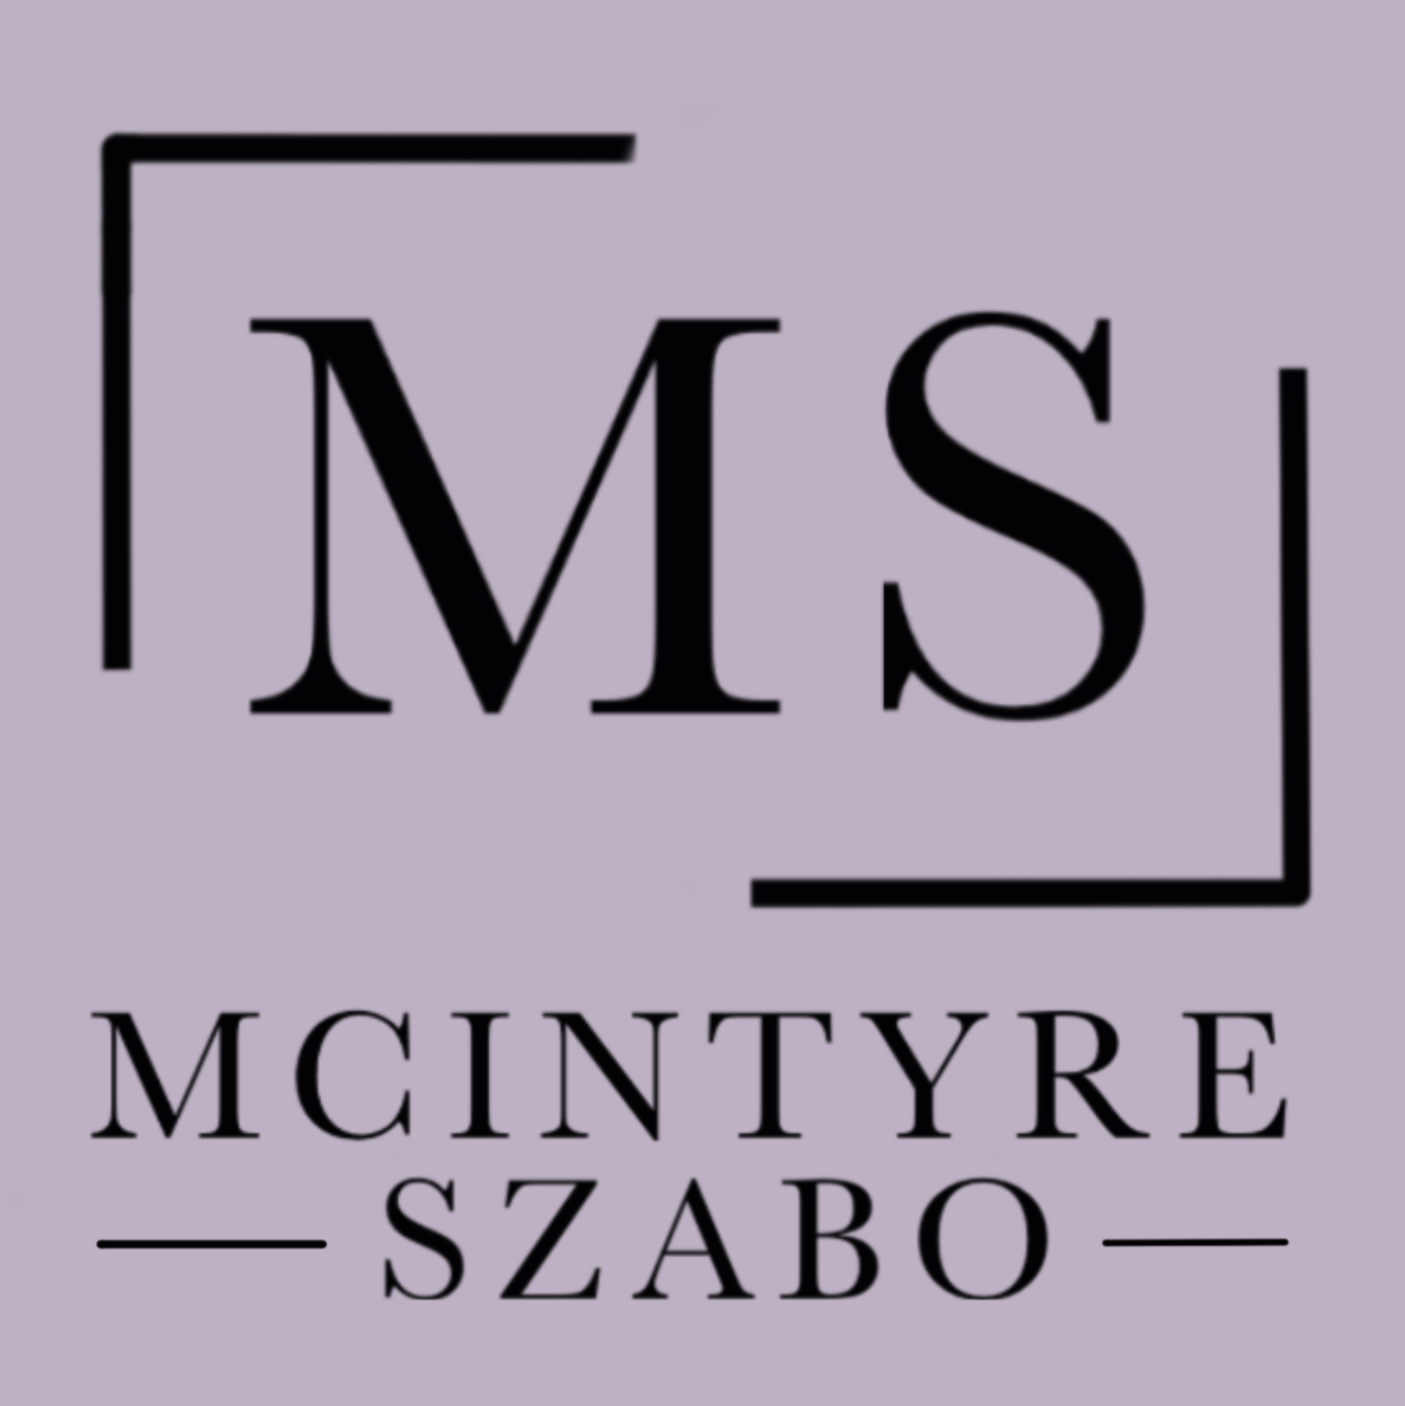 McIntyre Szabo Professional Corporation